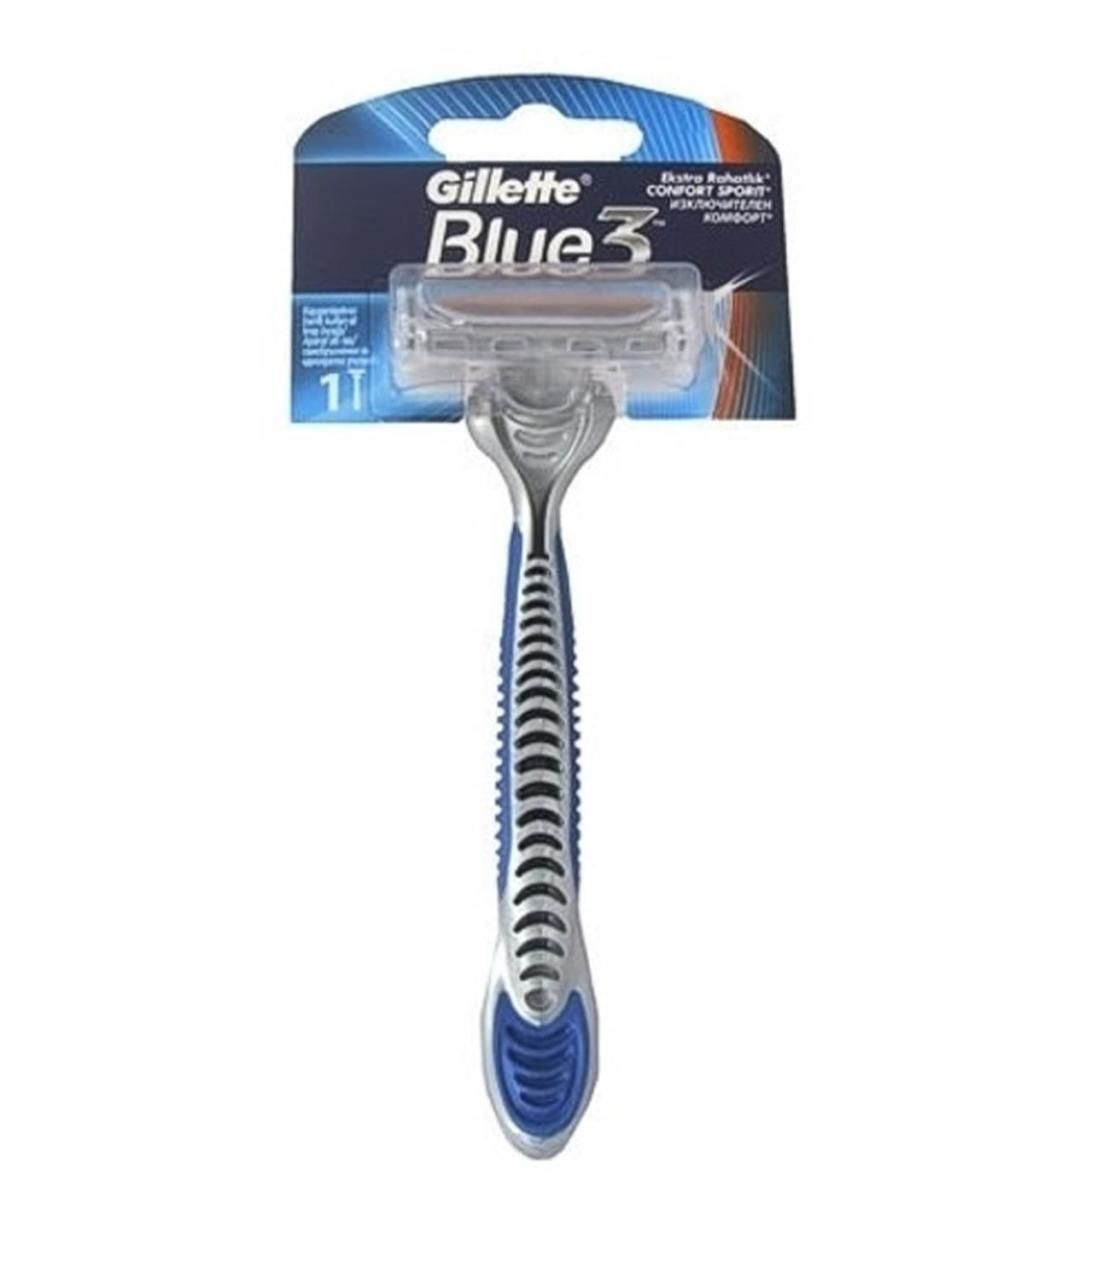 Gillette Blue 3 Comfort Tıraş Bıçağı 1 Adet